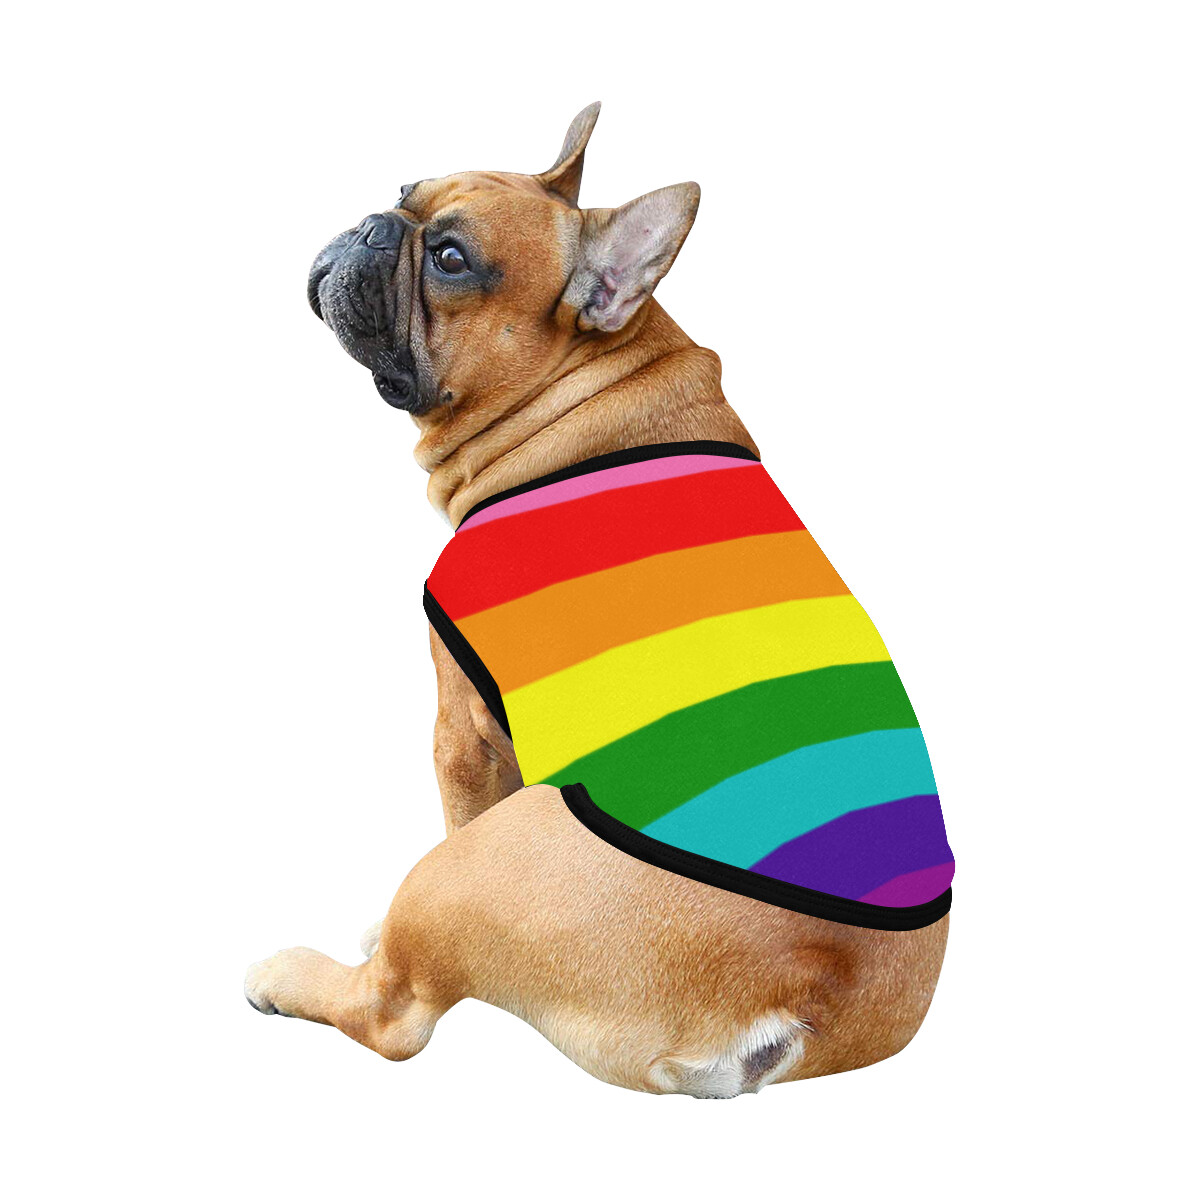 🐕🏳️‍🌈 Love is love Dog Tank Top, Dog shirt, Dog t-shirt, Dog clothes, Dog clothing, 7 sizes XS to 3XL, LGBTQ, pride flag, rainbow flag, LGBT, Dog gift, Gift for dogs, horizontal stripes